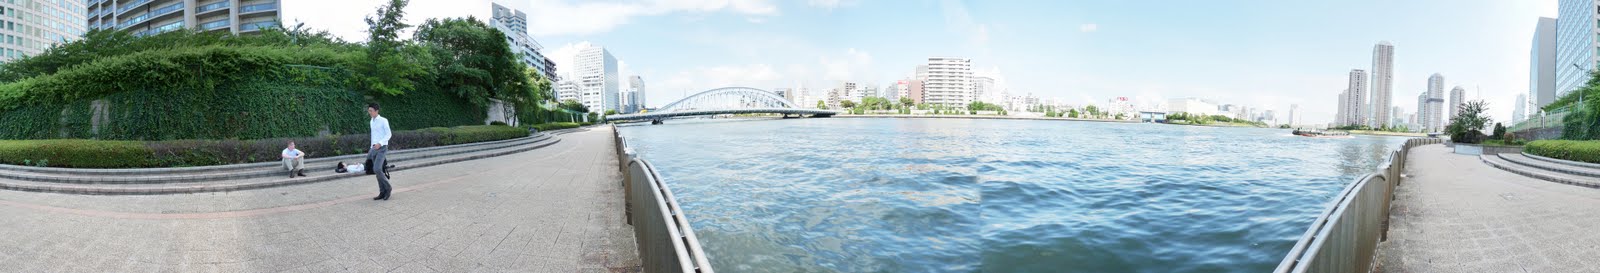 Tokyo restaurant reviewer looking at sumida river and eitai bridge